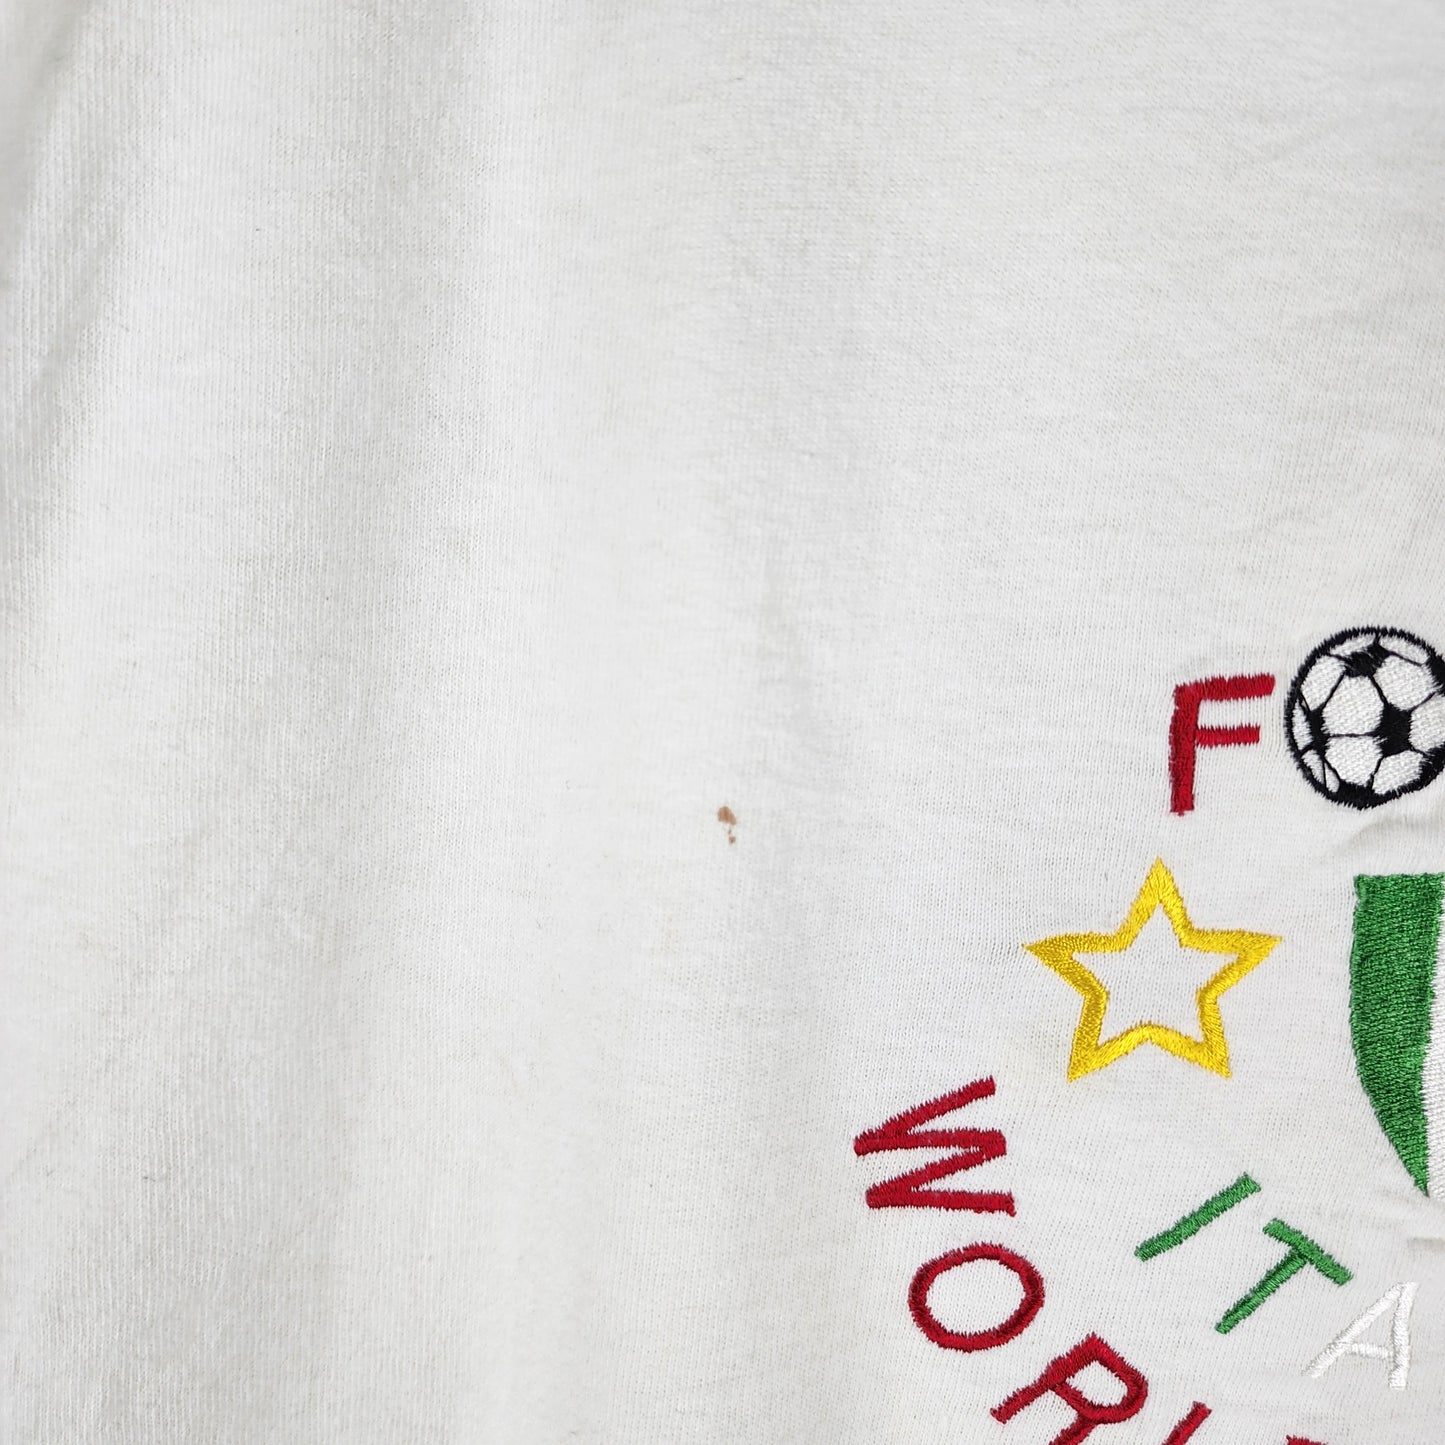 Vintage USA Fifa World Cup 1994 "Italia Team" T-shirt